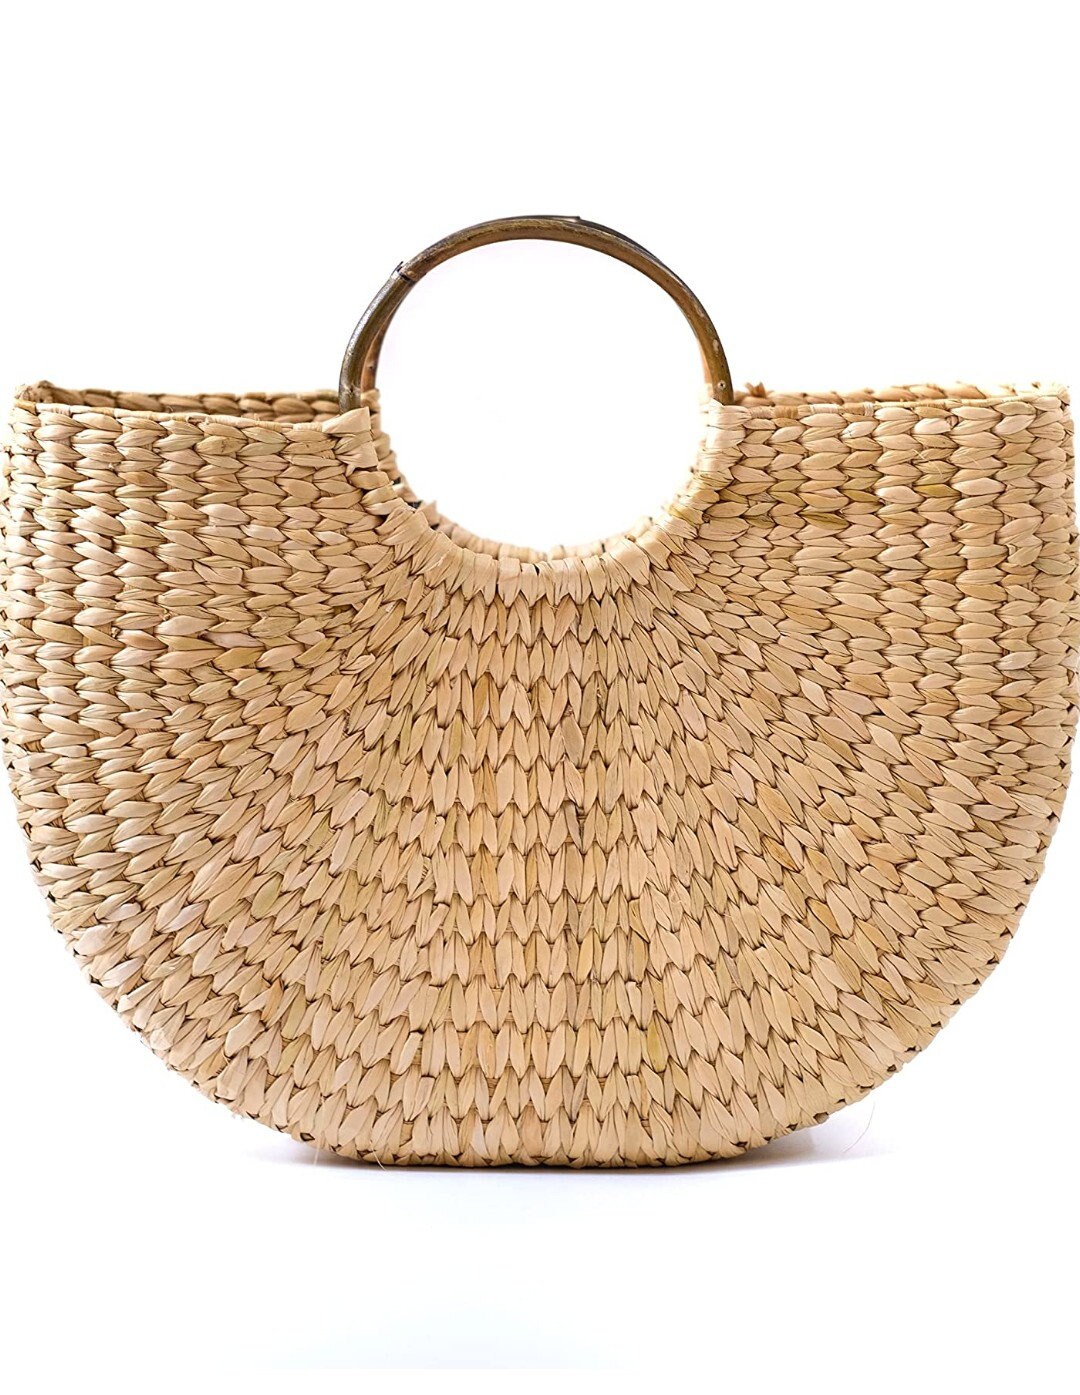 Beige Handbag Kauna Grass Bag Summer Beach Tote Bag with Tassel for Women  Girls | eBay